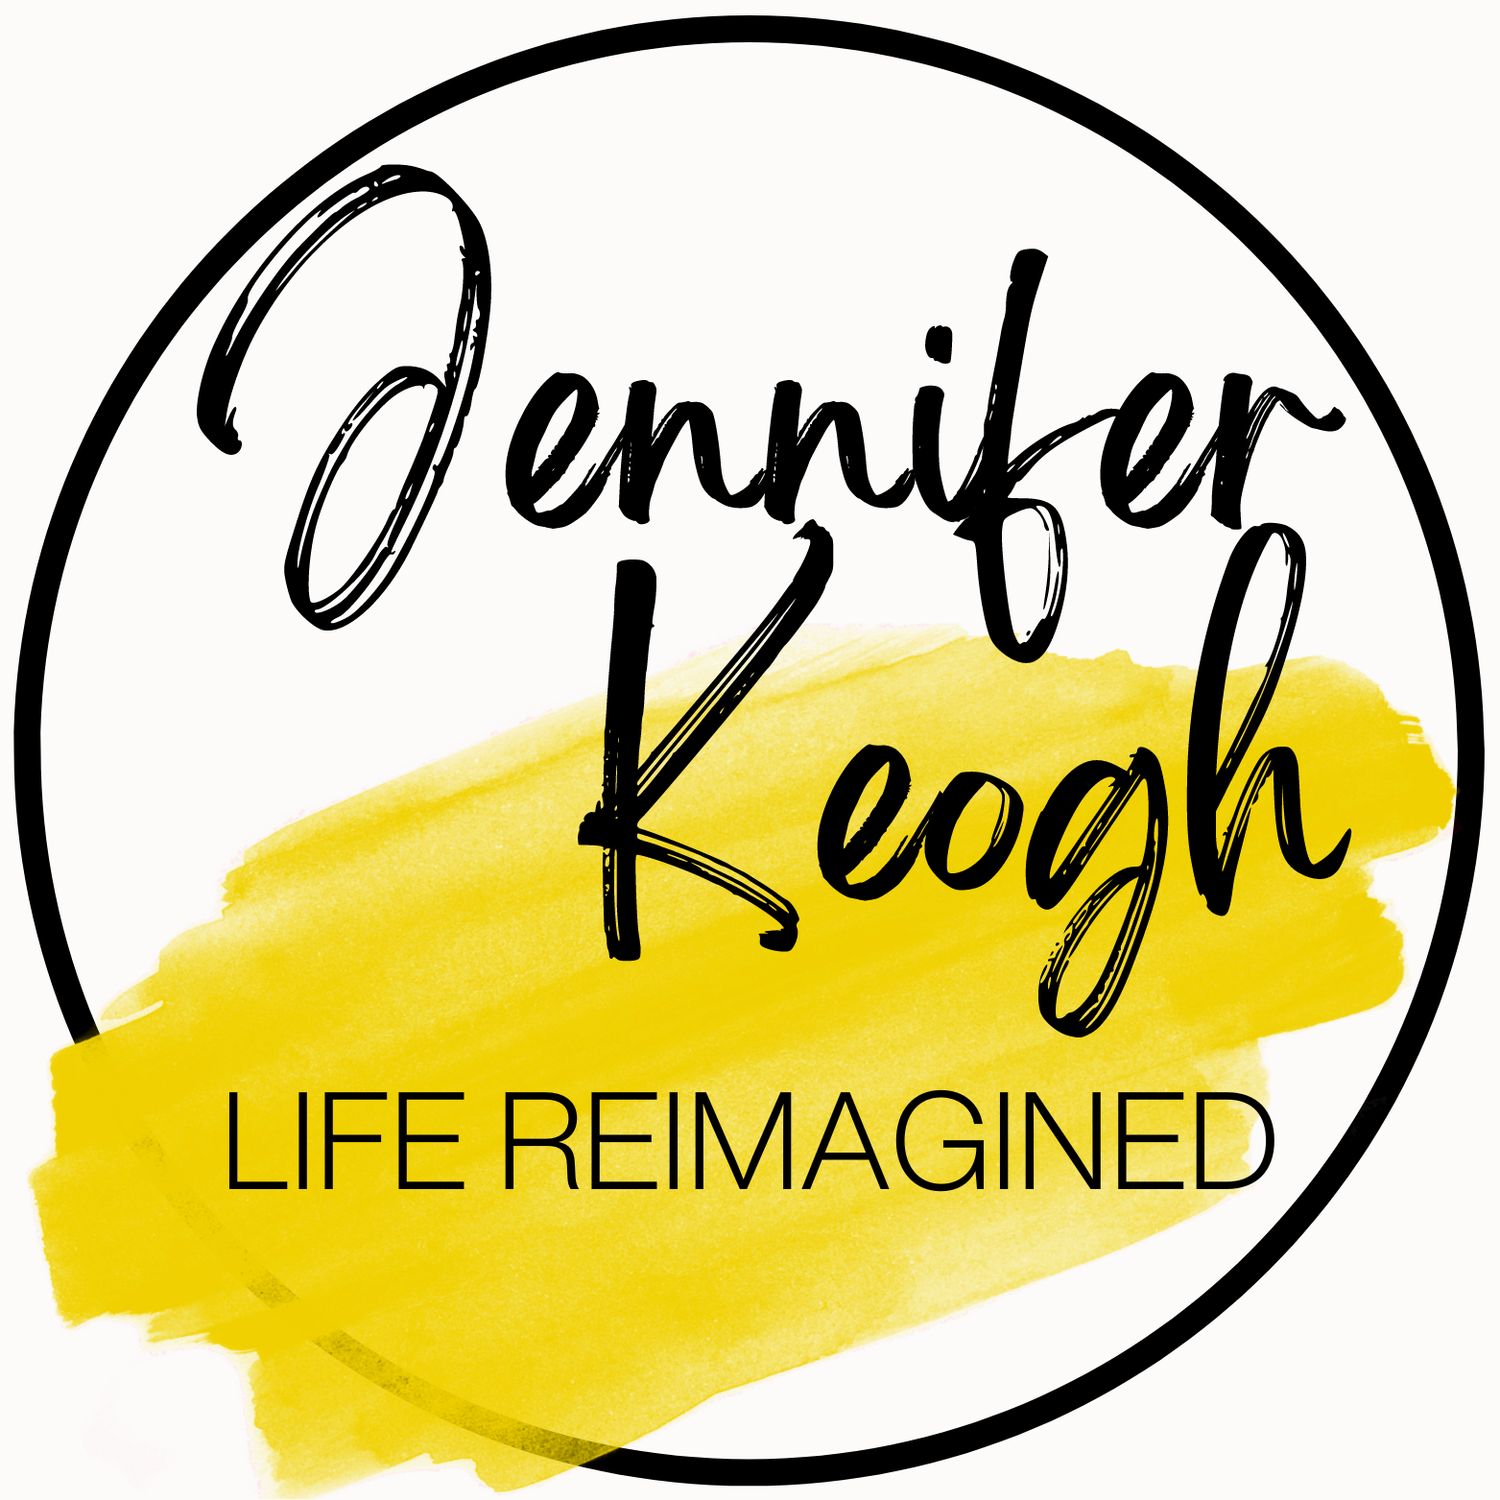 Jennifer Keogh